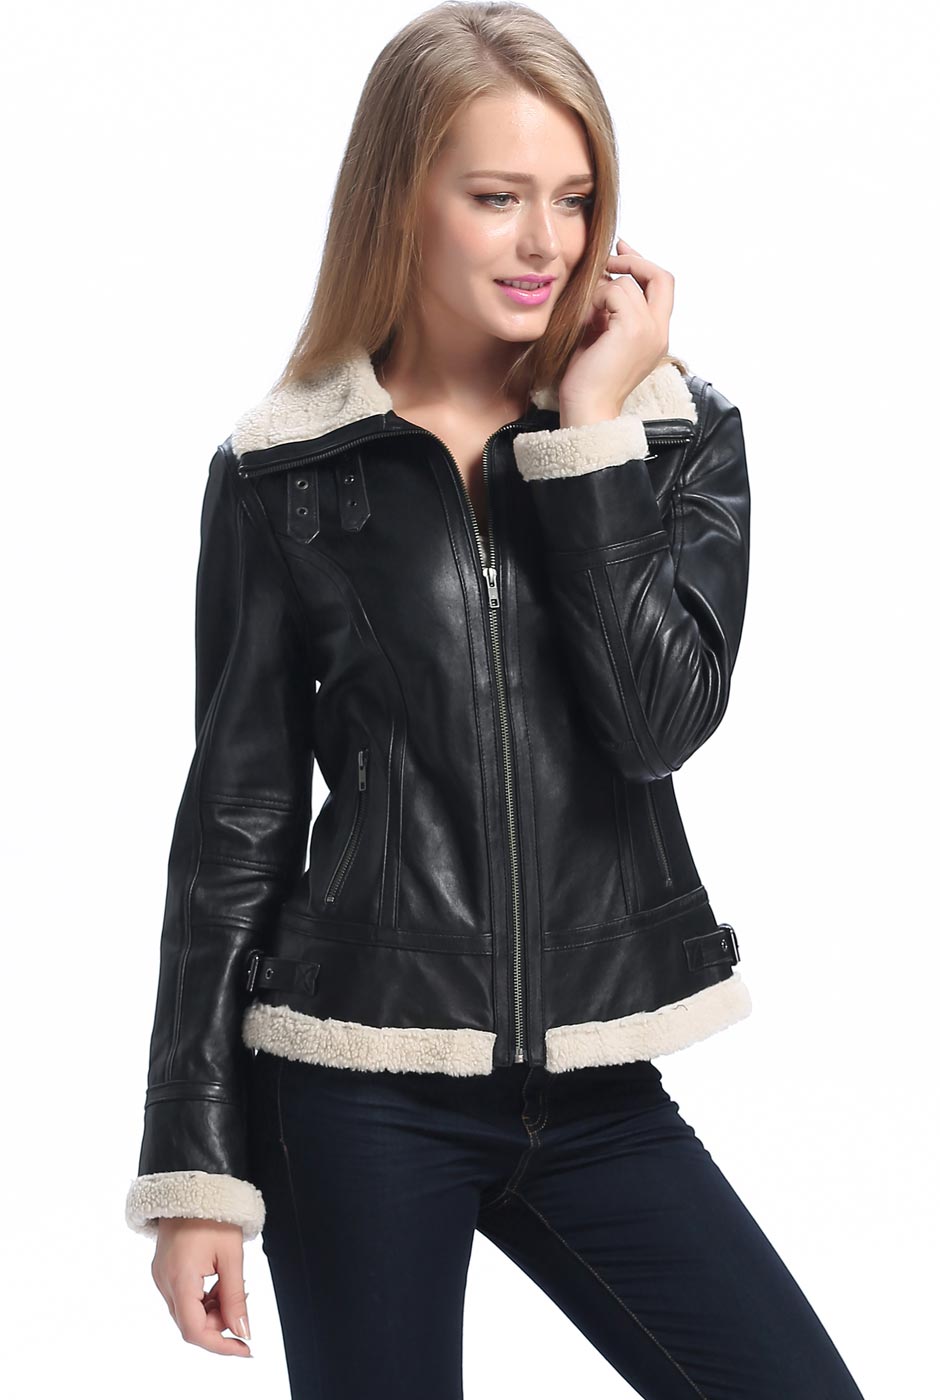 BGSD Women Brittany Lambskin Leather Jacket